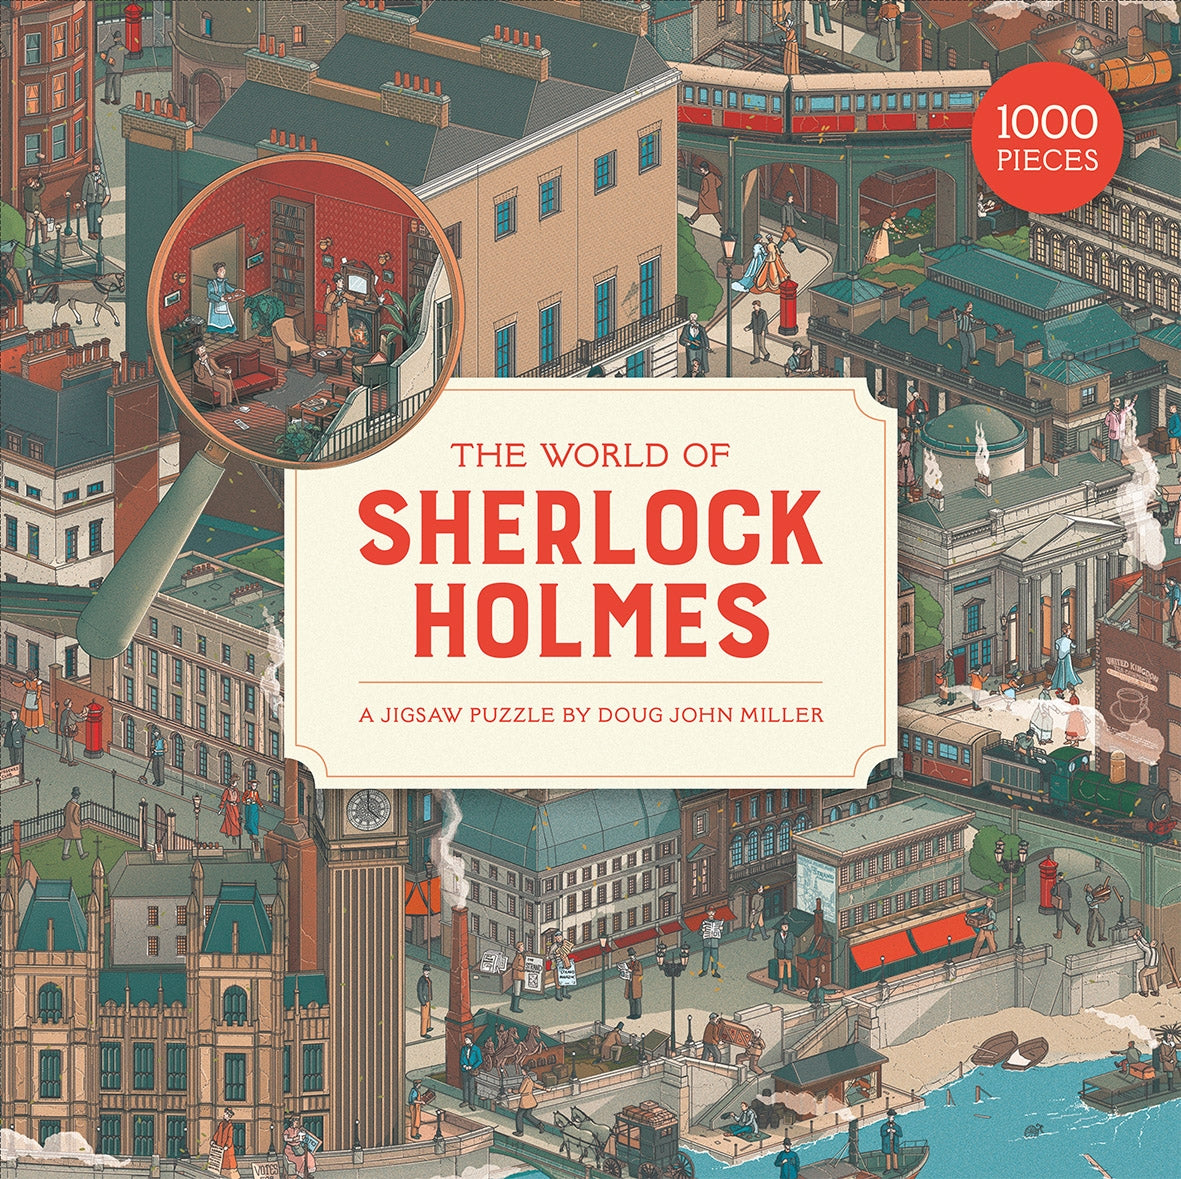 The World of Sherlock Holmes by Nicholas Utechin